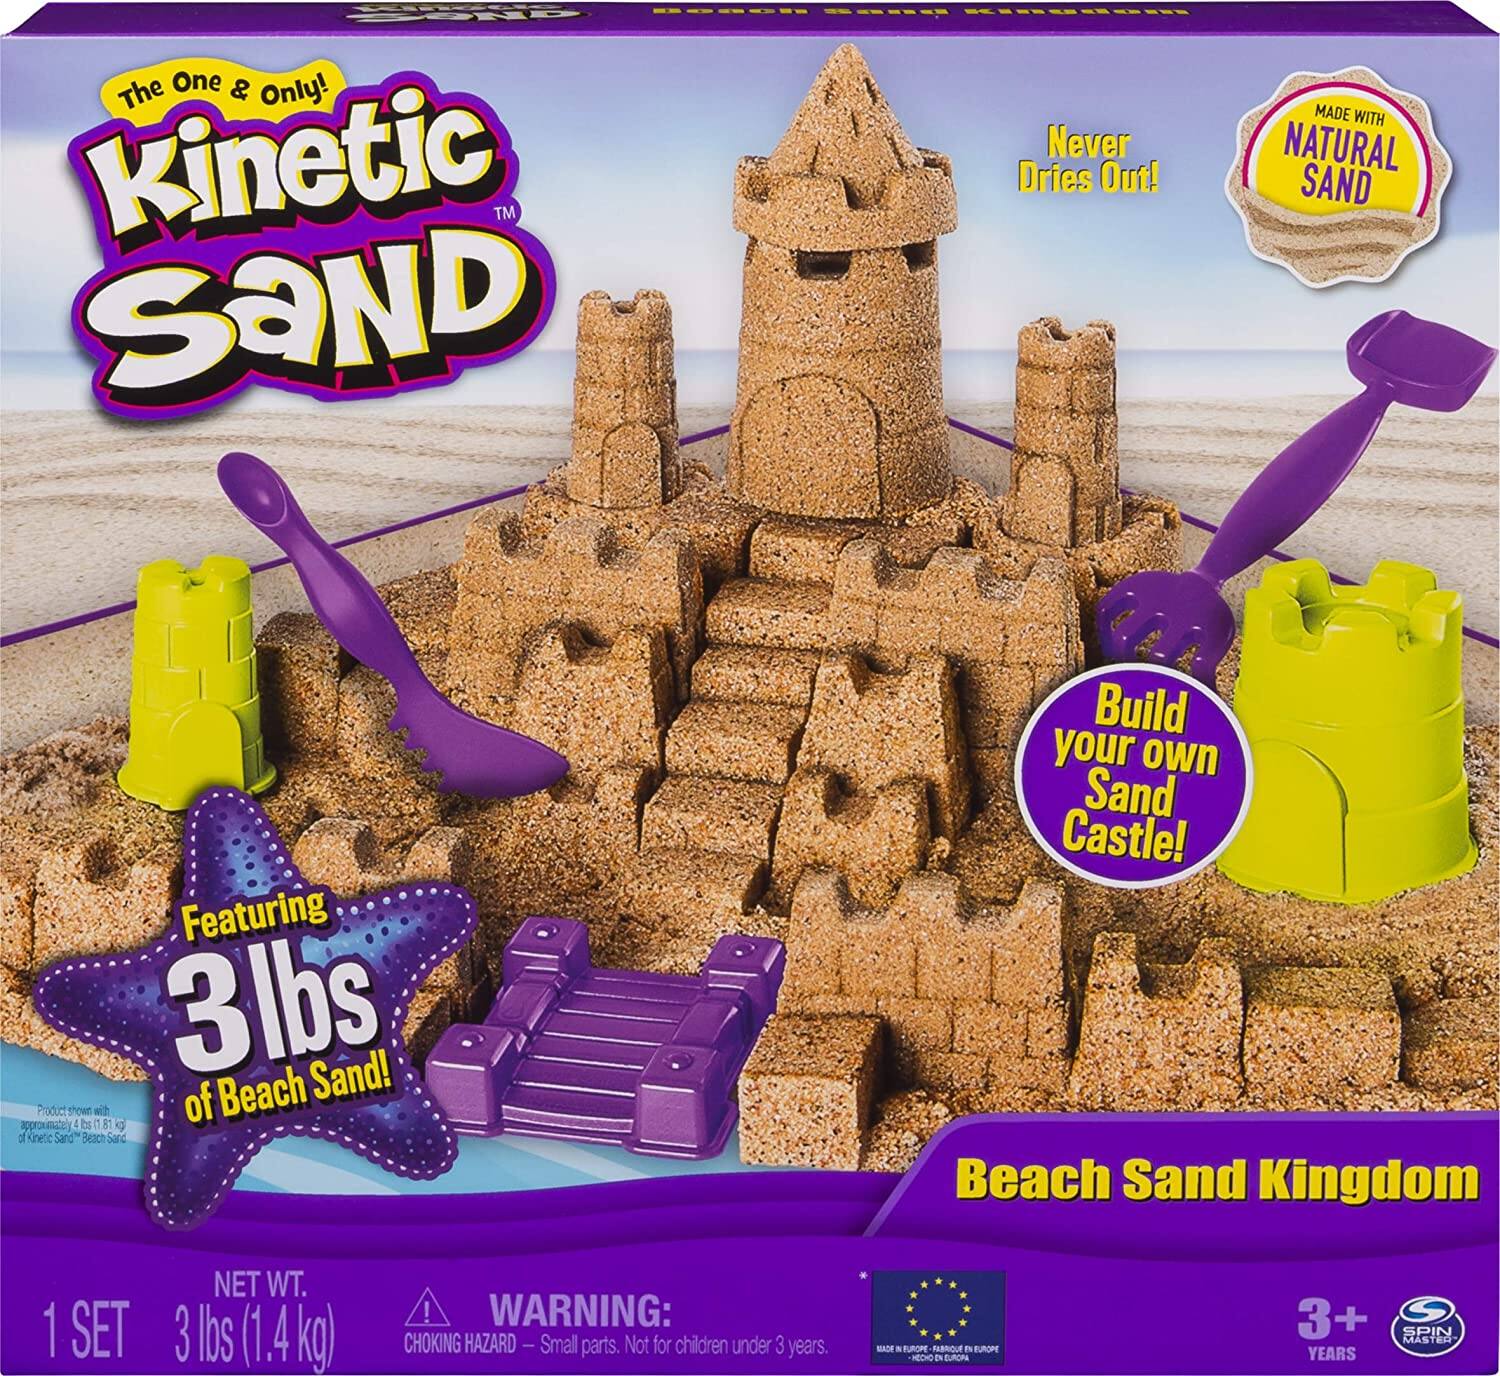 3 LBS Kinetic Sand Beach Sand Kingdom Playset $11.60 - Amazon